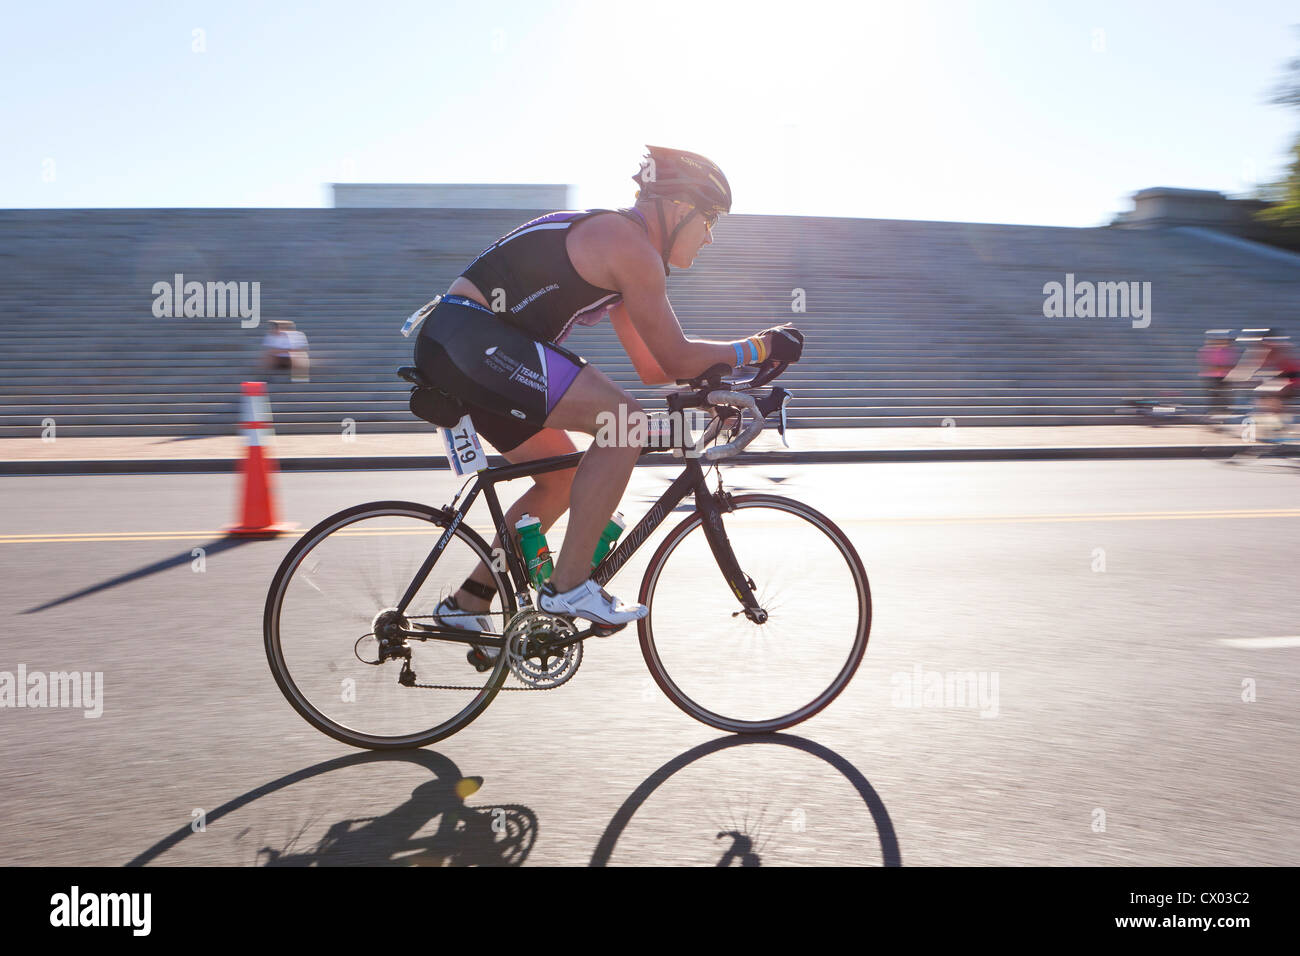 Cyclist racing in bright sun light - USA Stock Photo